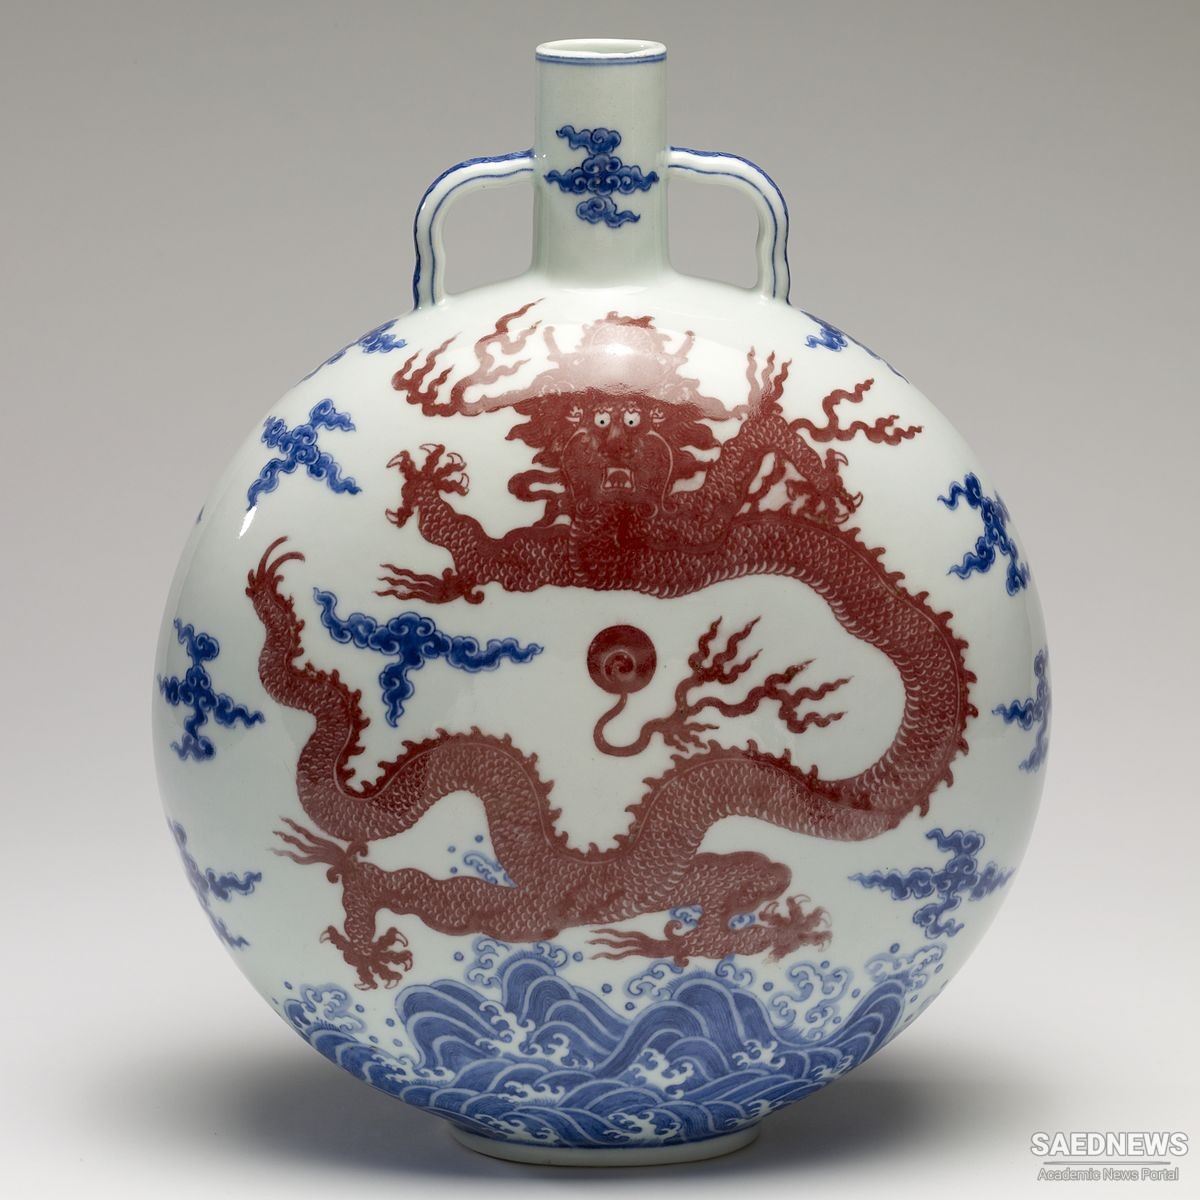 Porcelain: Heated Ceramics